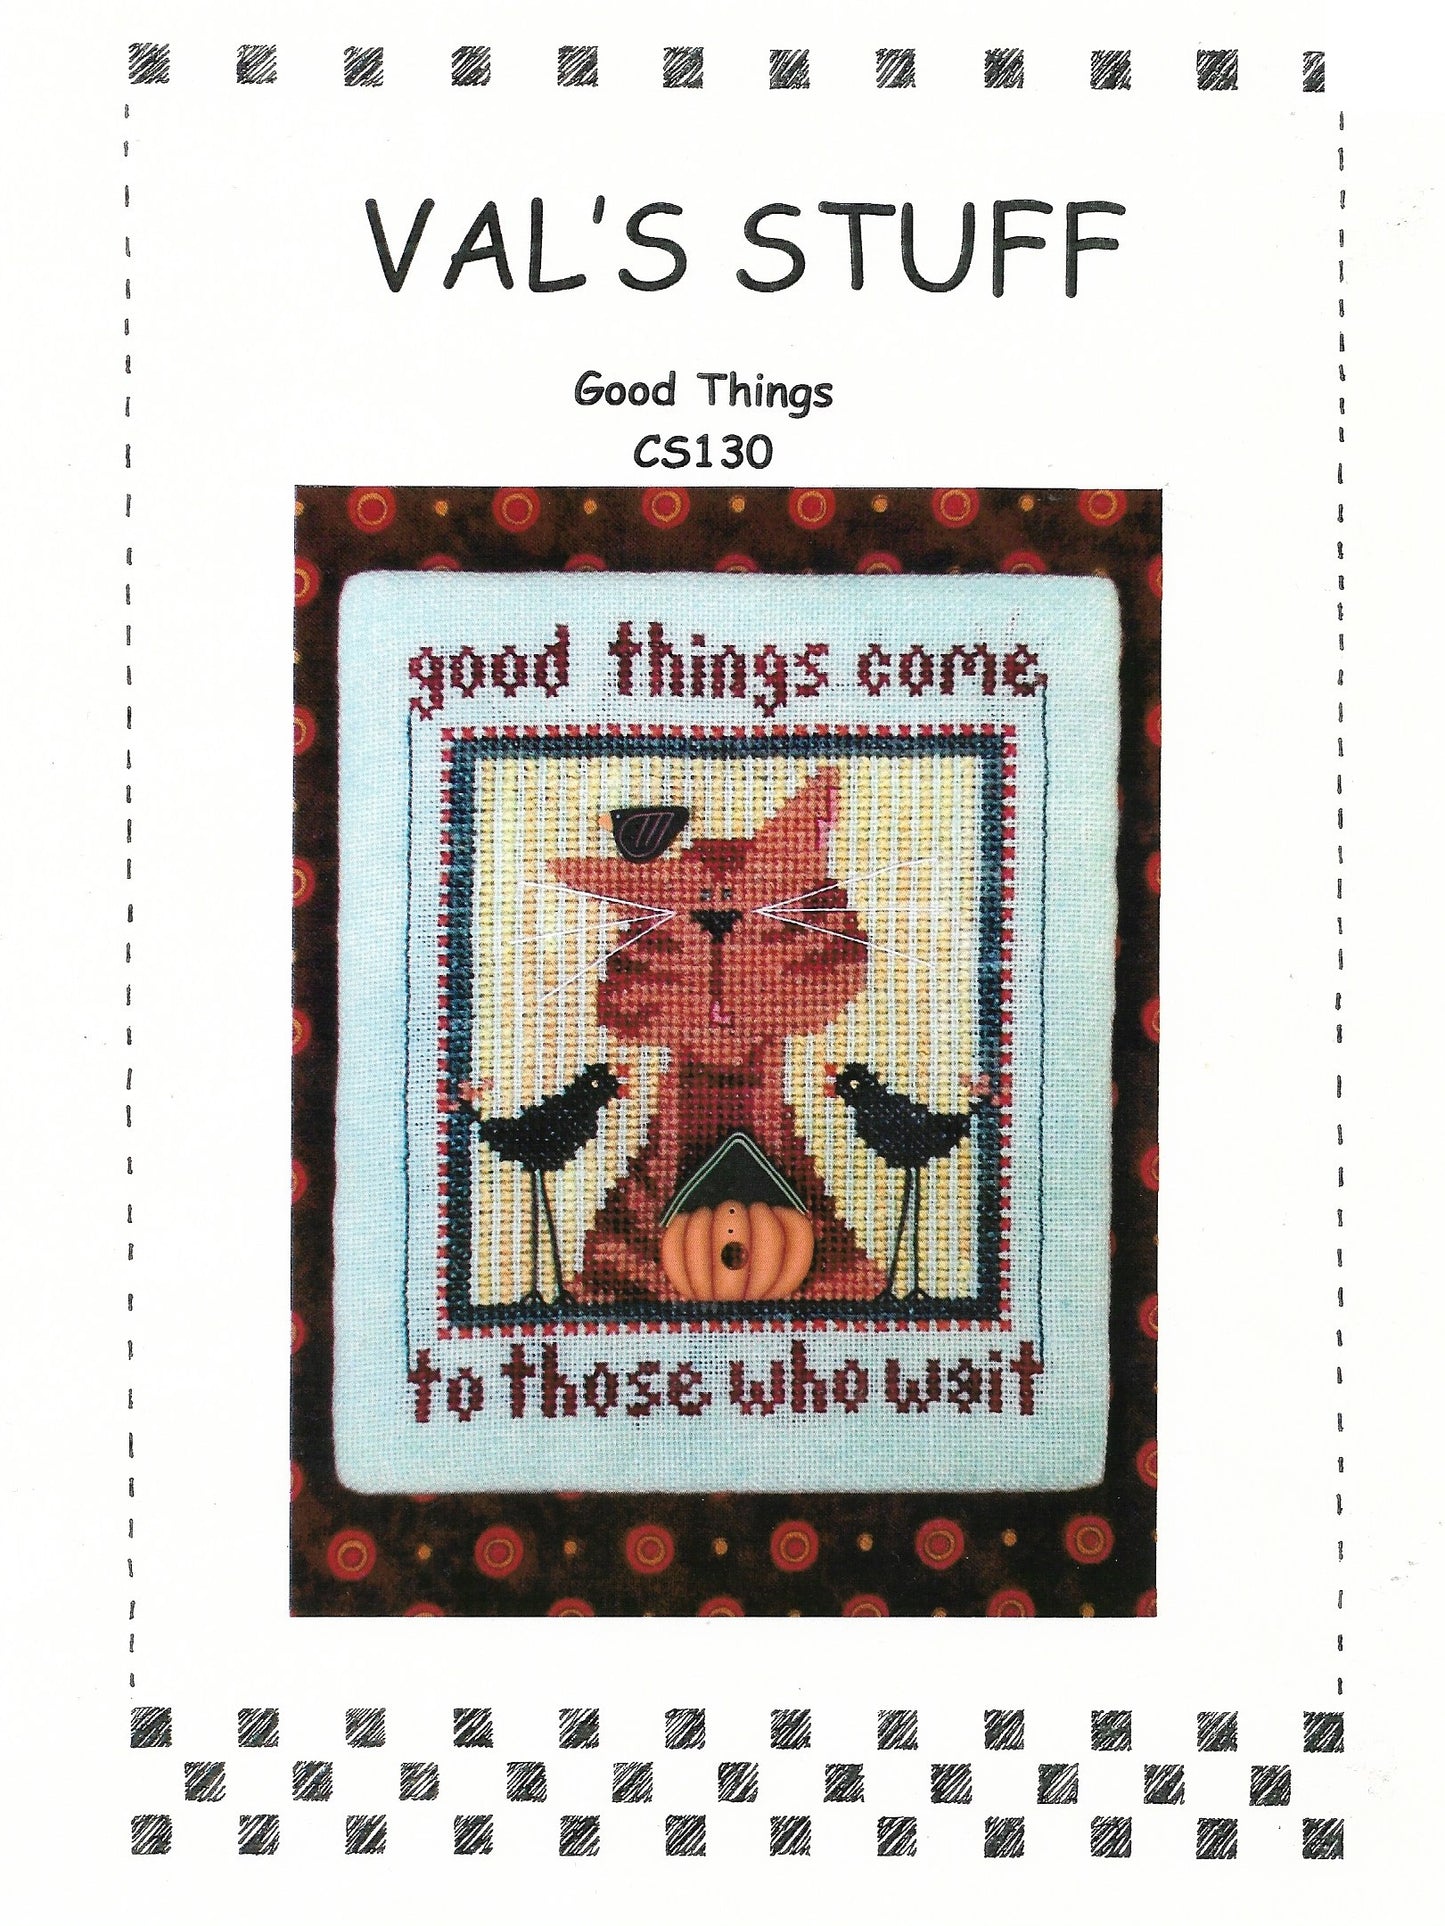 Val's Stuff Good Things cat cross stitch pattern